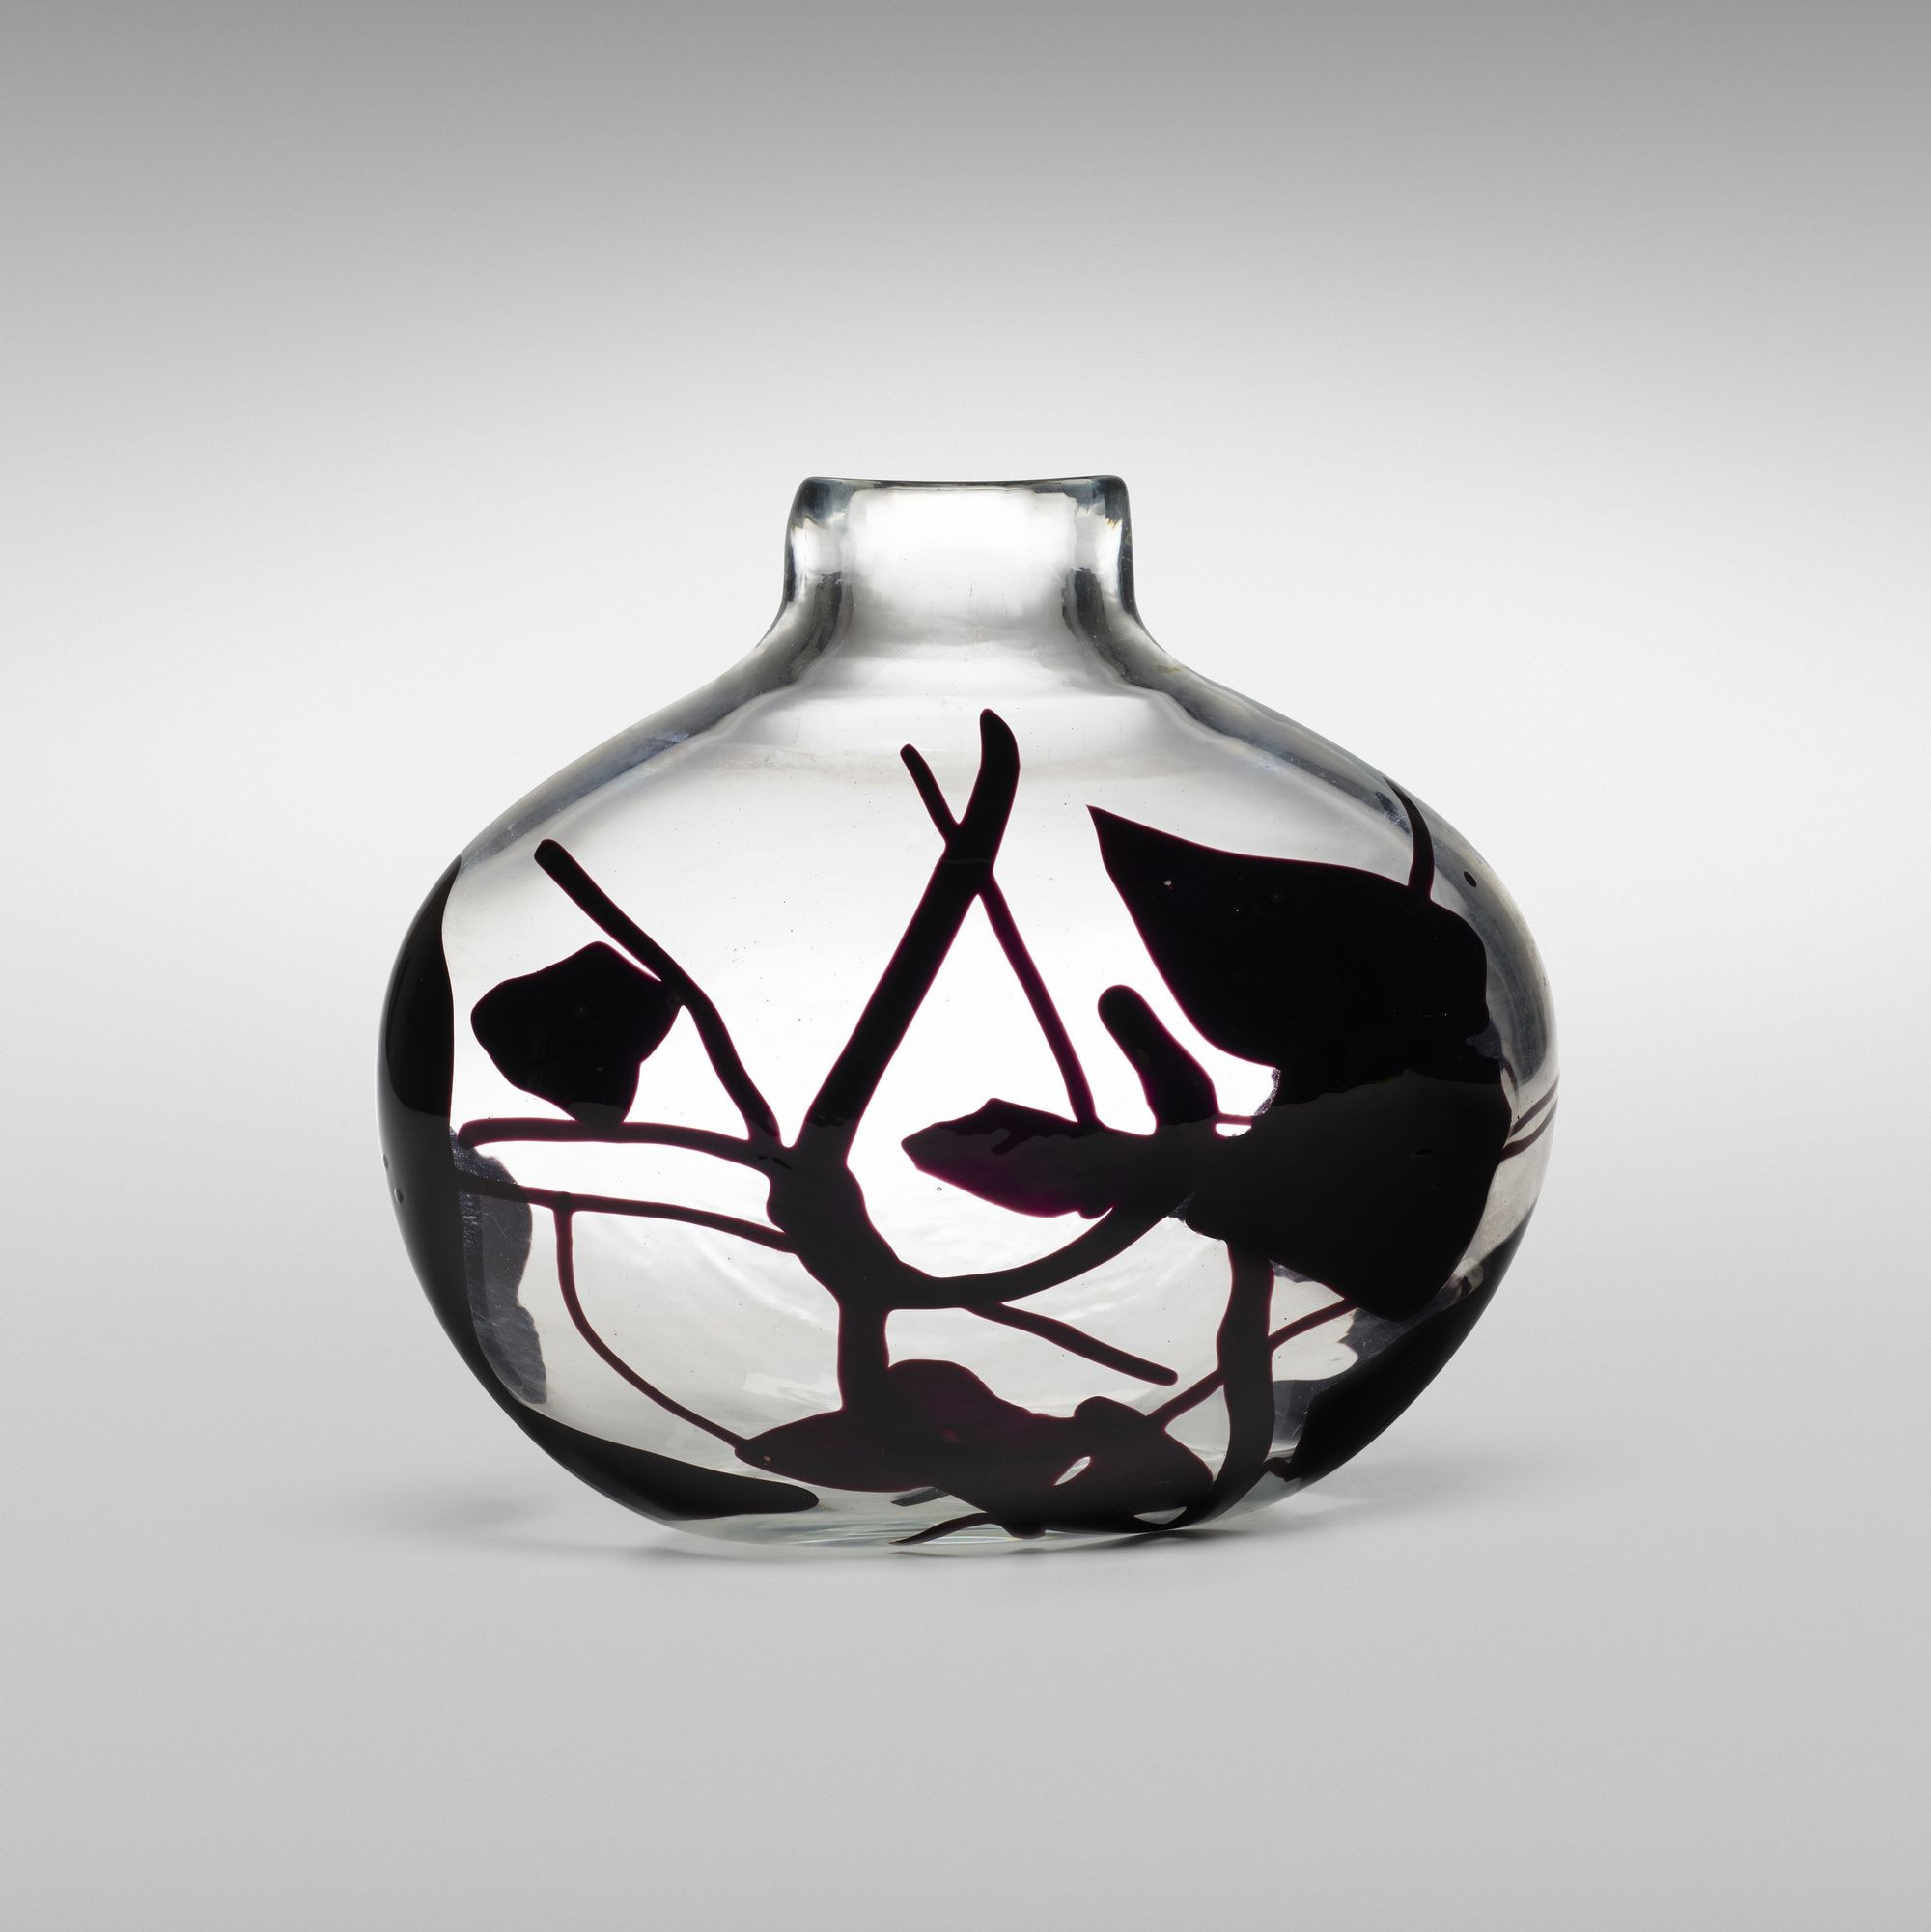 glass jug vase of 19 vase art competition 2018 the weekly world with 139 fulvio bianconi important con macchie vase model 4324